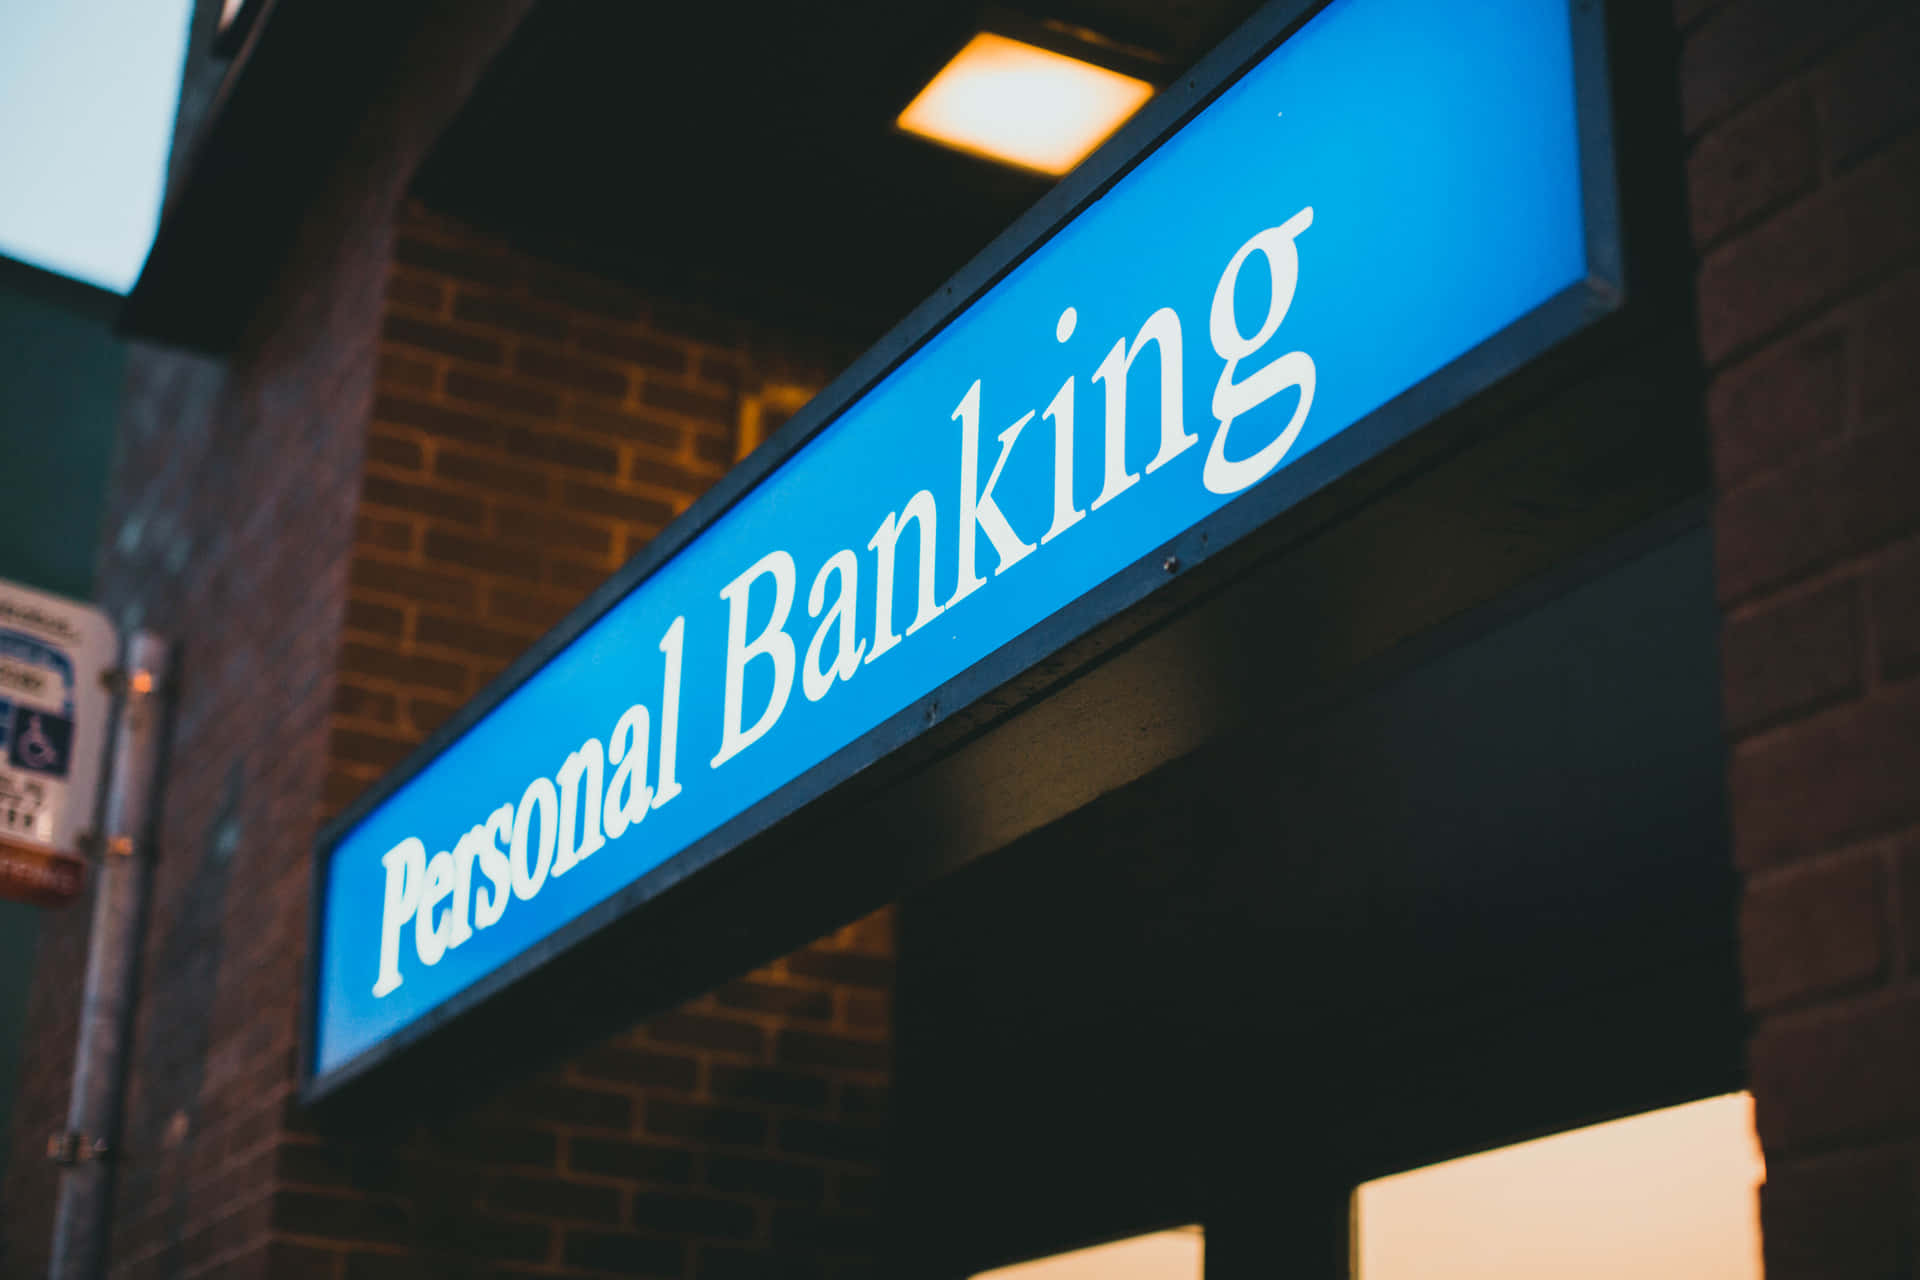 Personal Banking Wallpaper